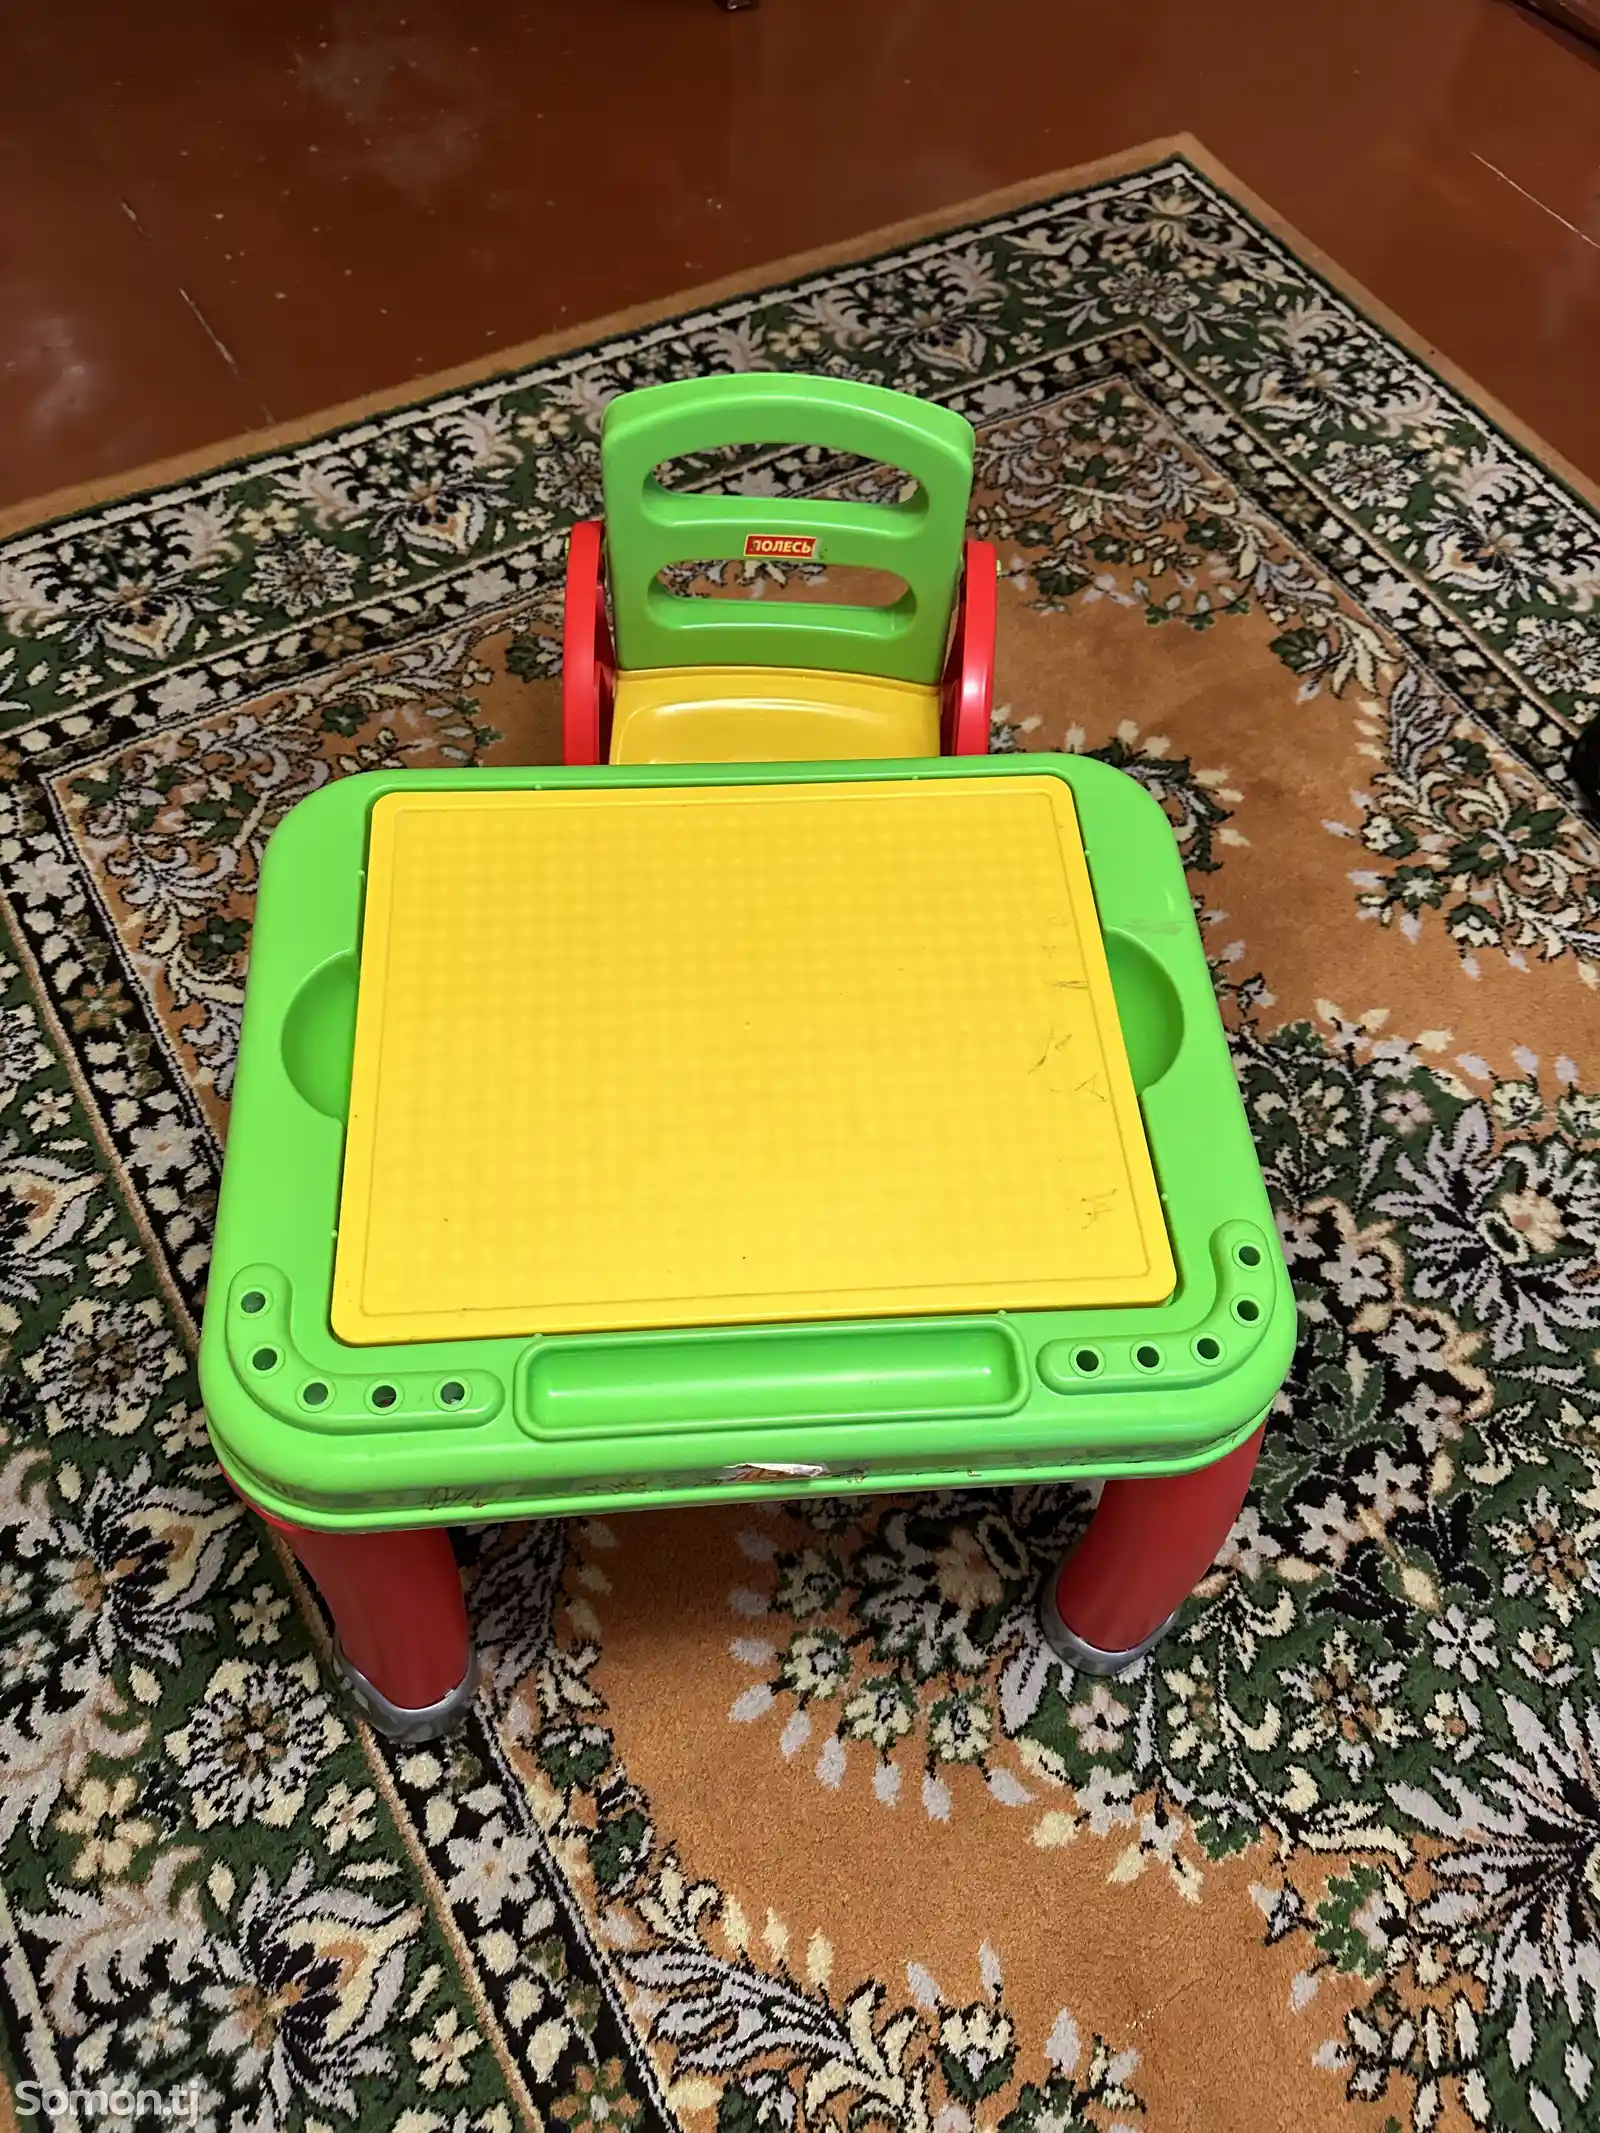 Детский стол и стул-1